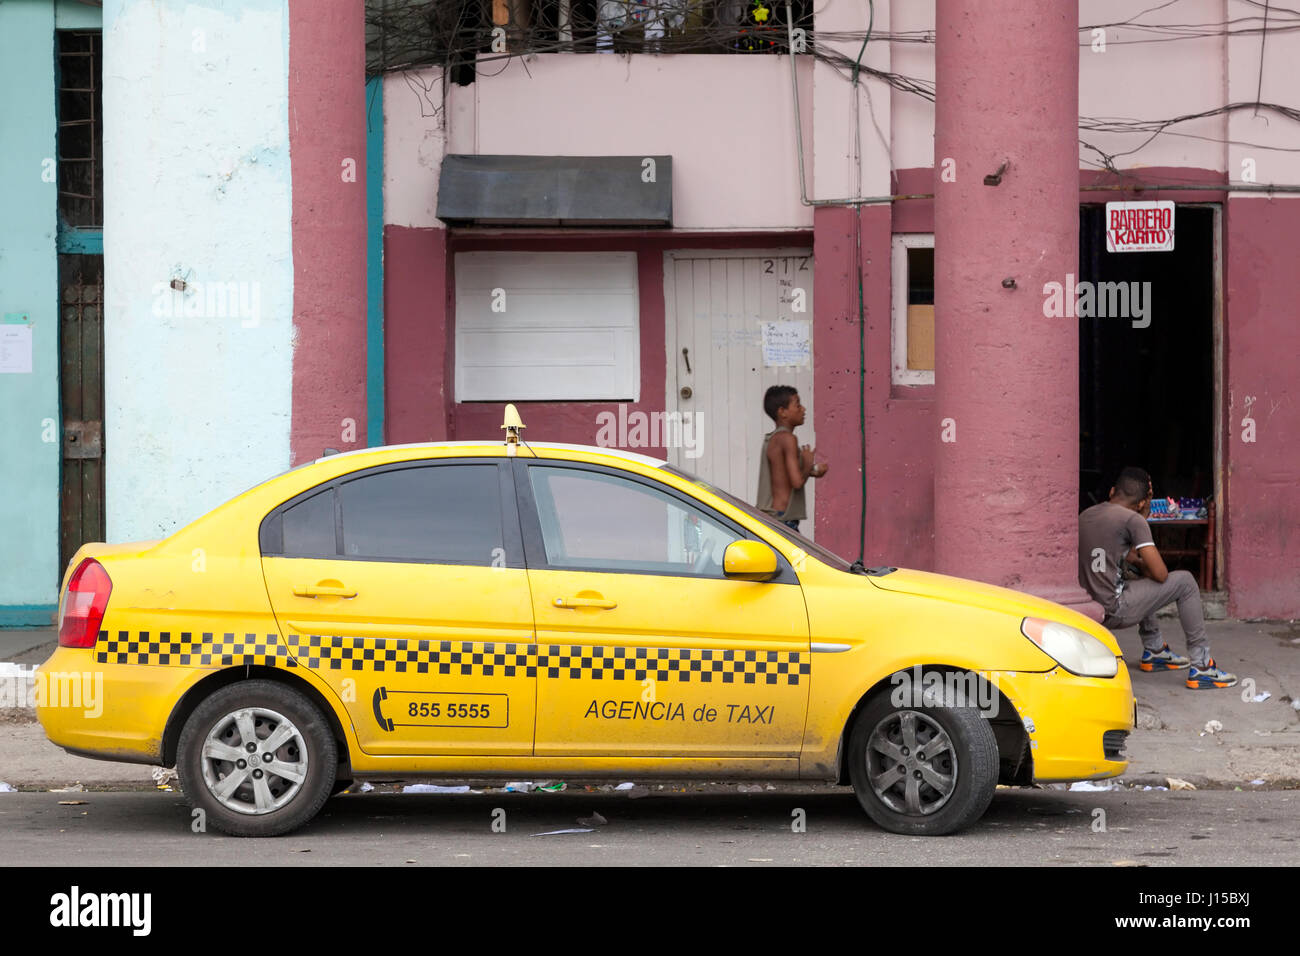 Ein Agencia de Taxi Taxi geparkt am Straßenrand in Havanna, Kuba. Stockfoto